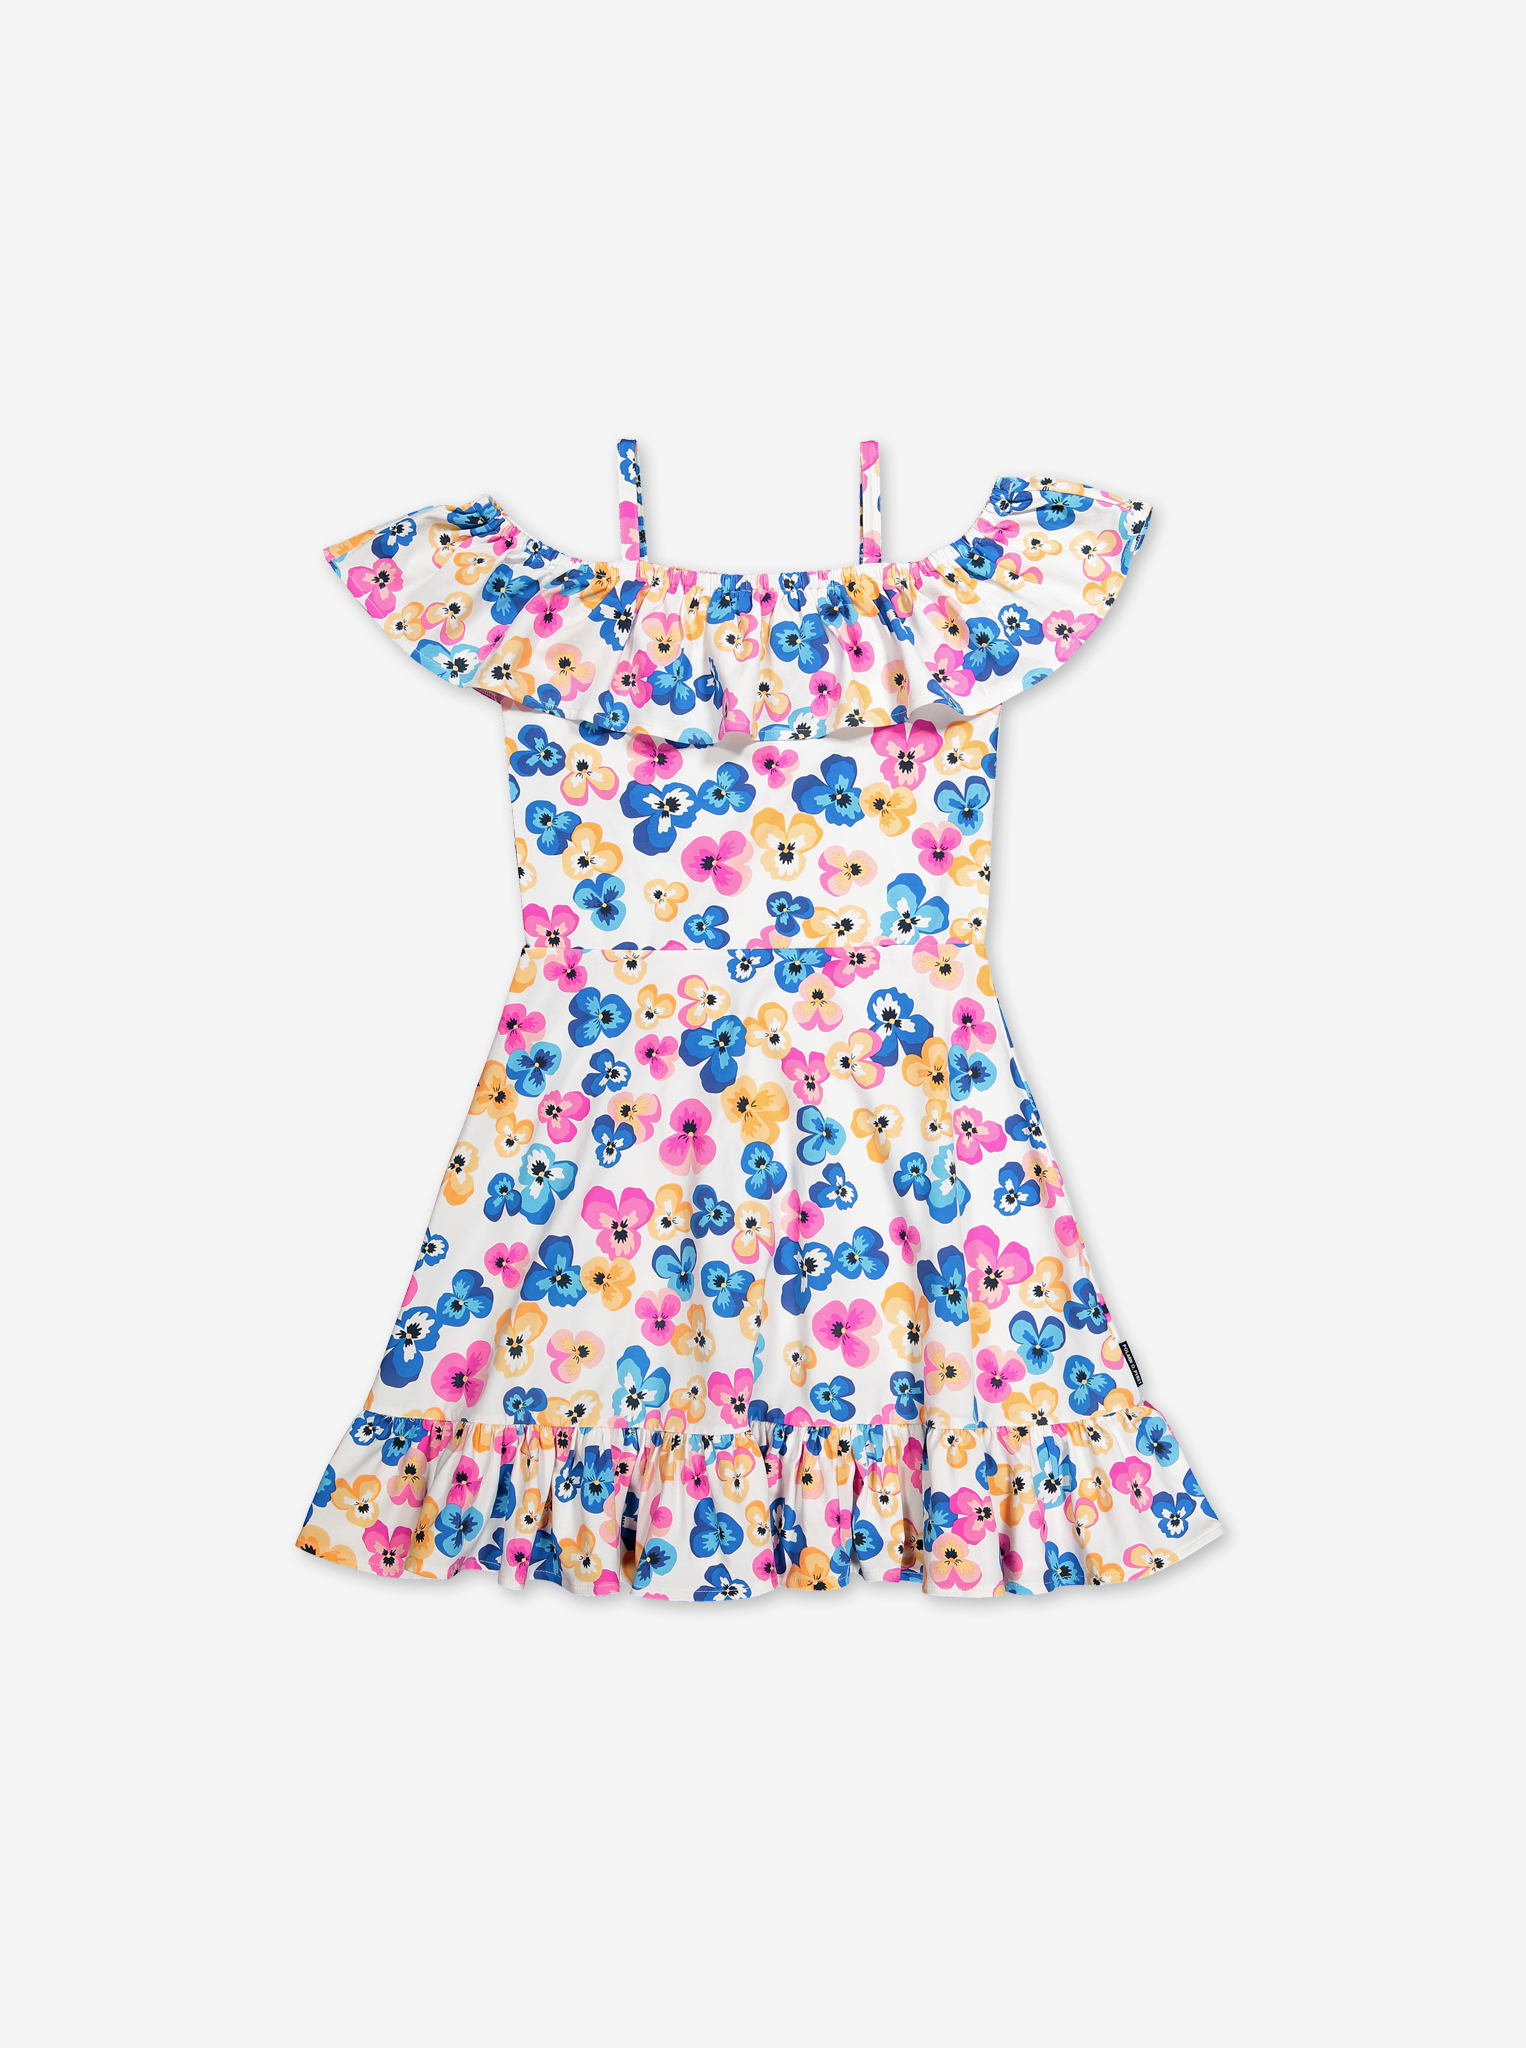 Floral Print Kids Dress-Girl-6-12y-White